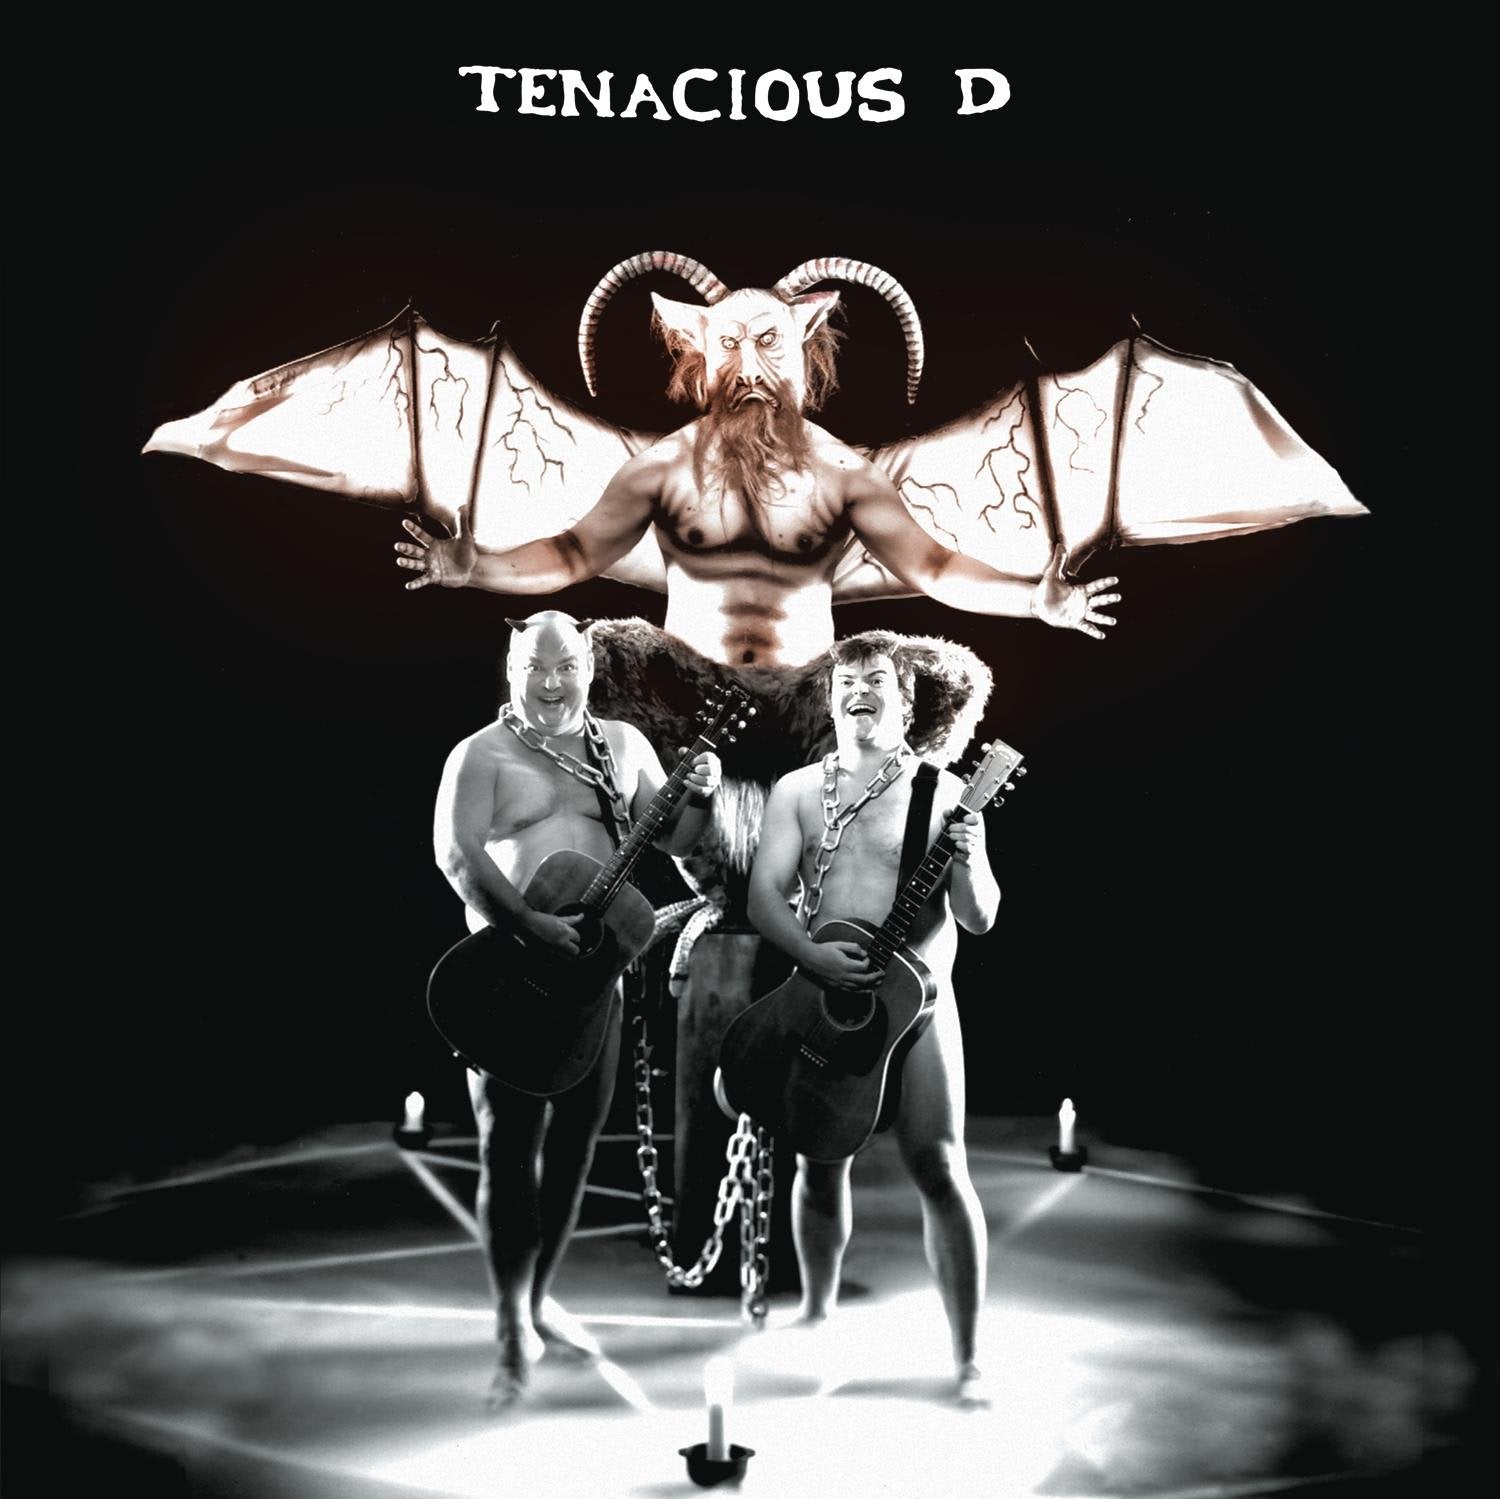 Tenacious D - Tenacious D (2013 12th Anniversary Ed. 180g 2LP gatefold reissue) - Vinyl - New